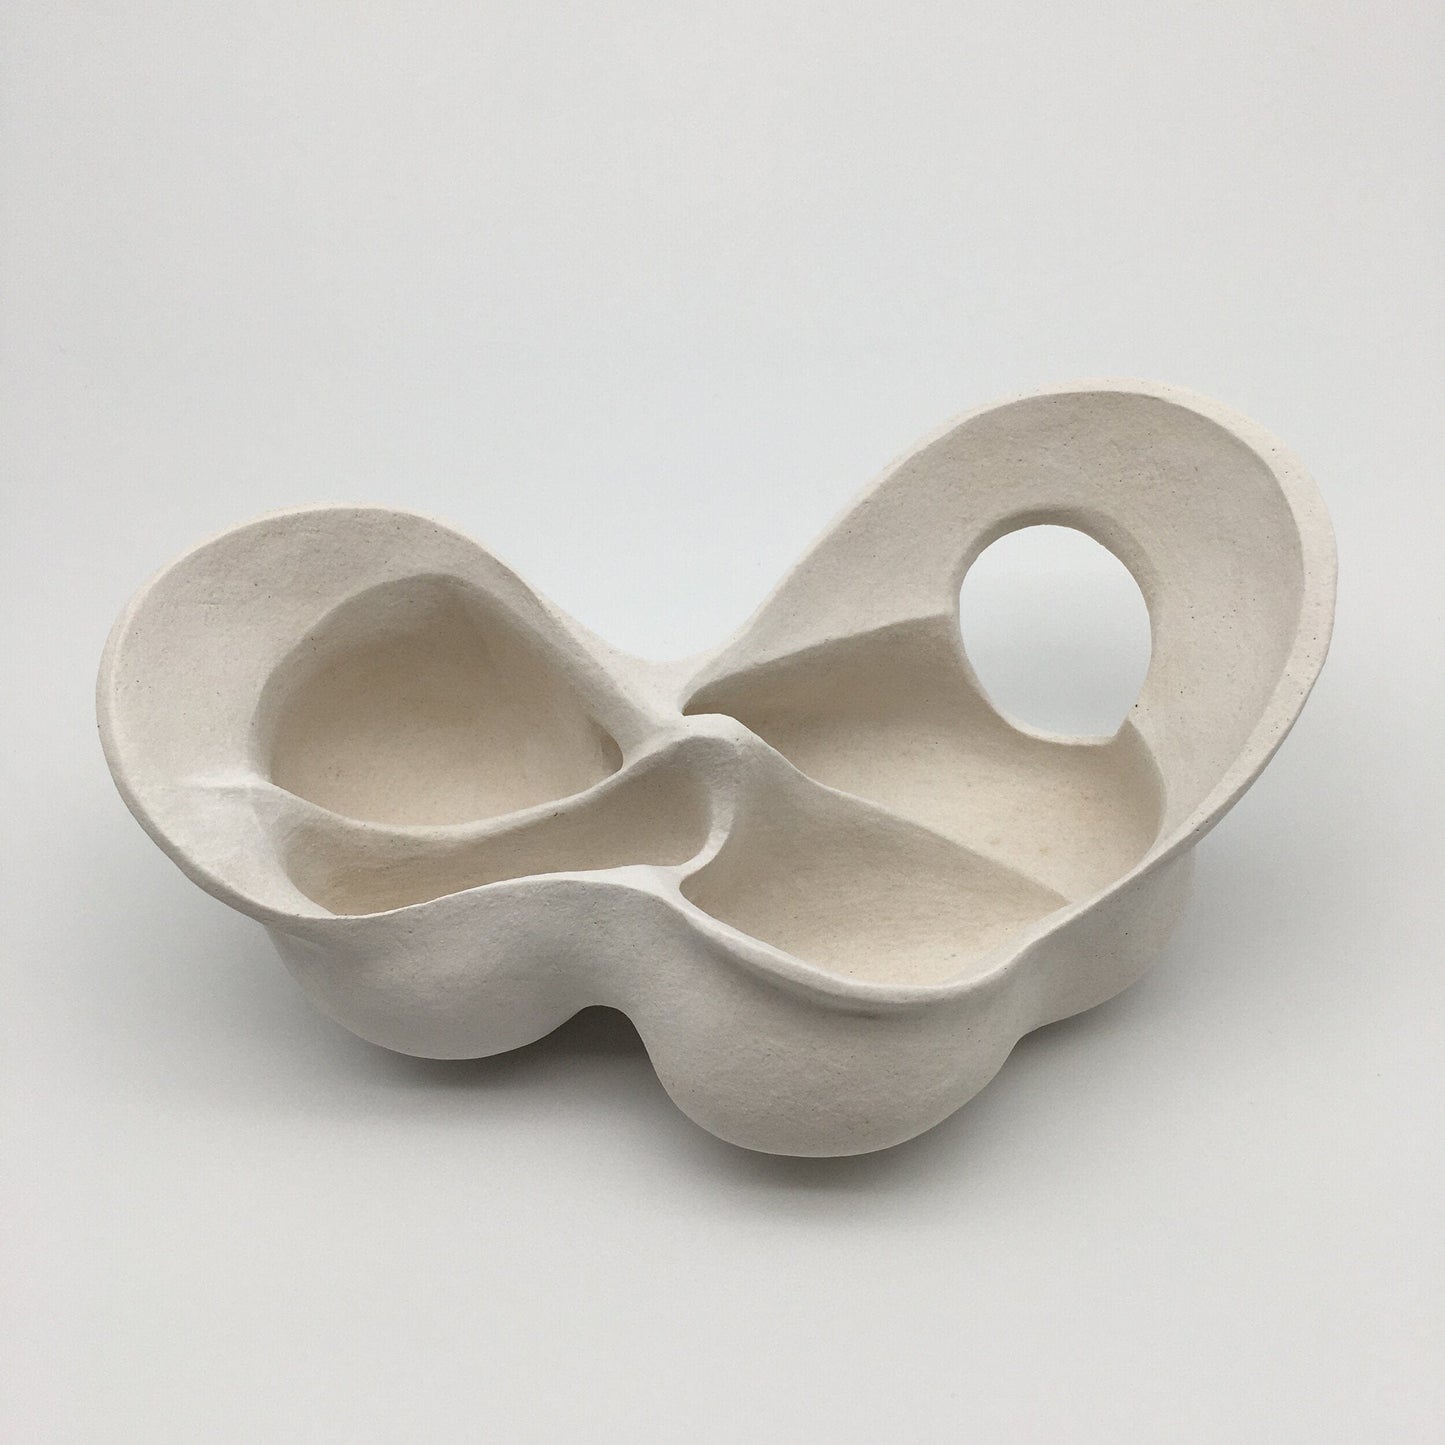 Unglazed Clay Skeletal Bowl Sculpture by Evamarie Pappas-Oglander